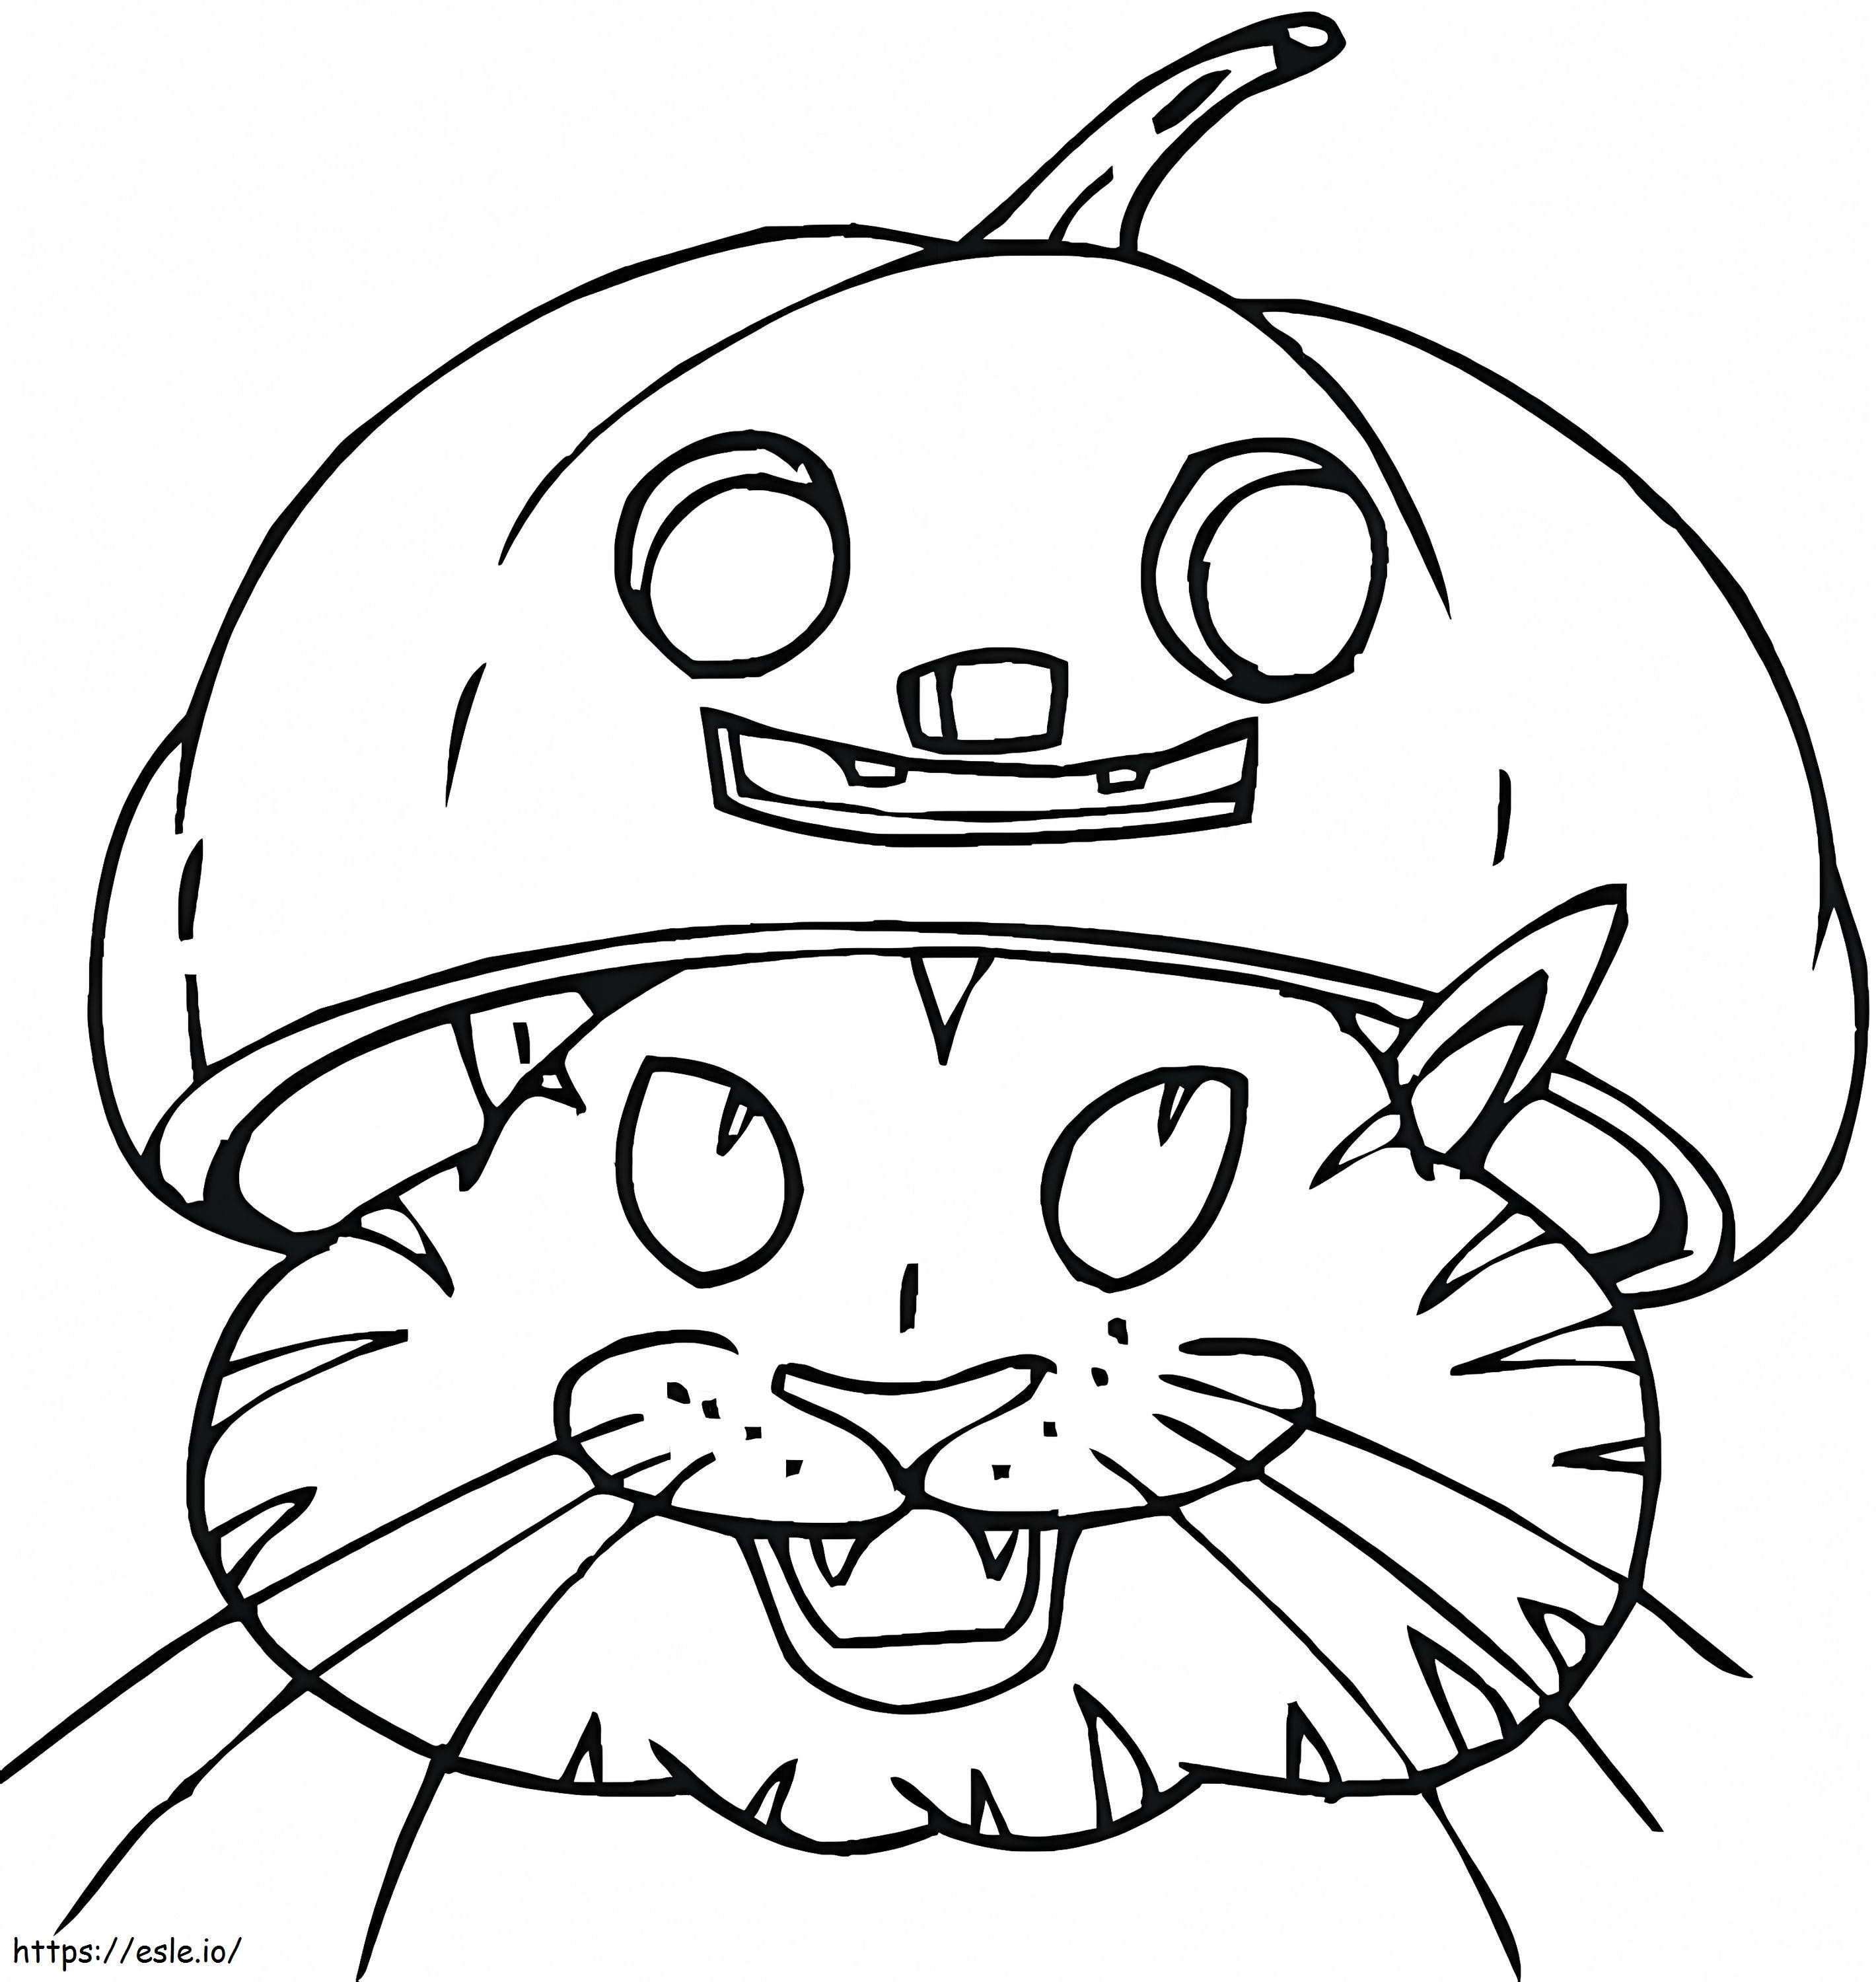 Gato de Halloween con sombrero de calabaza para colorear